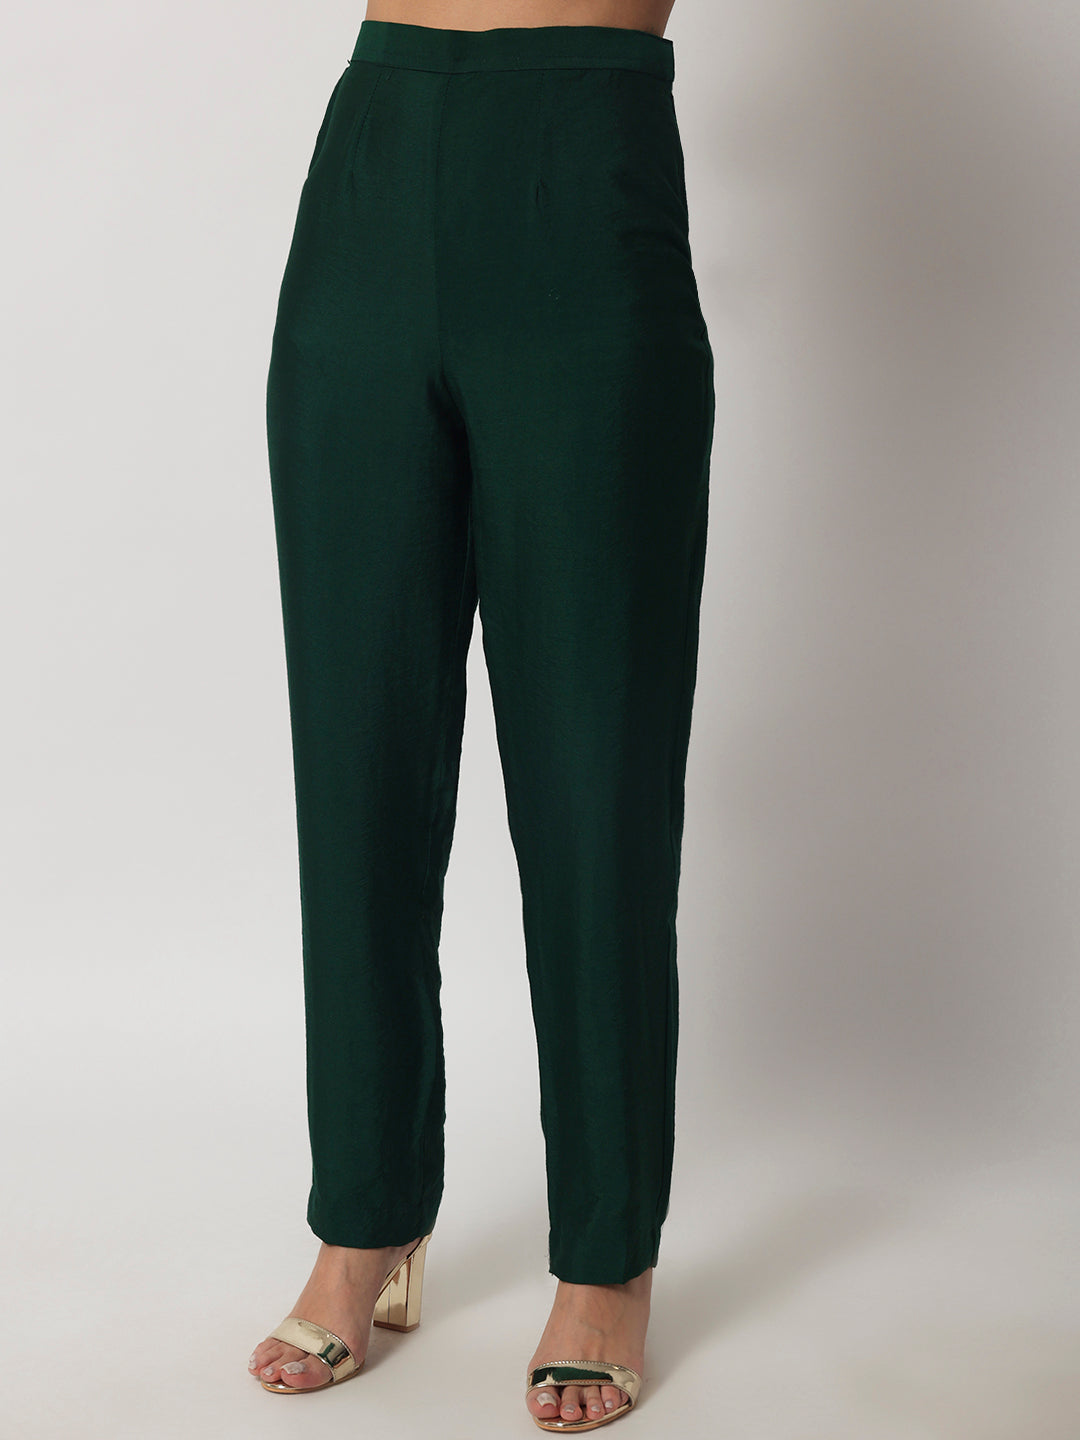 Women's Emerald Green Straight Kurti With Straight Pants And Banarasi Bandhej Dupatta - Anokherang